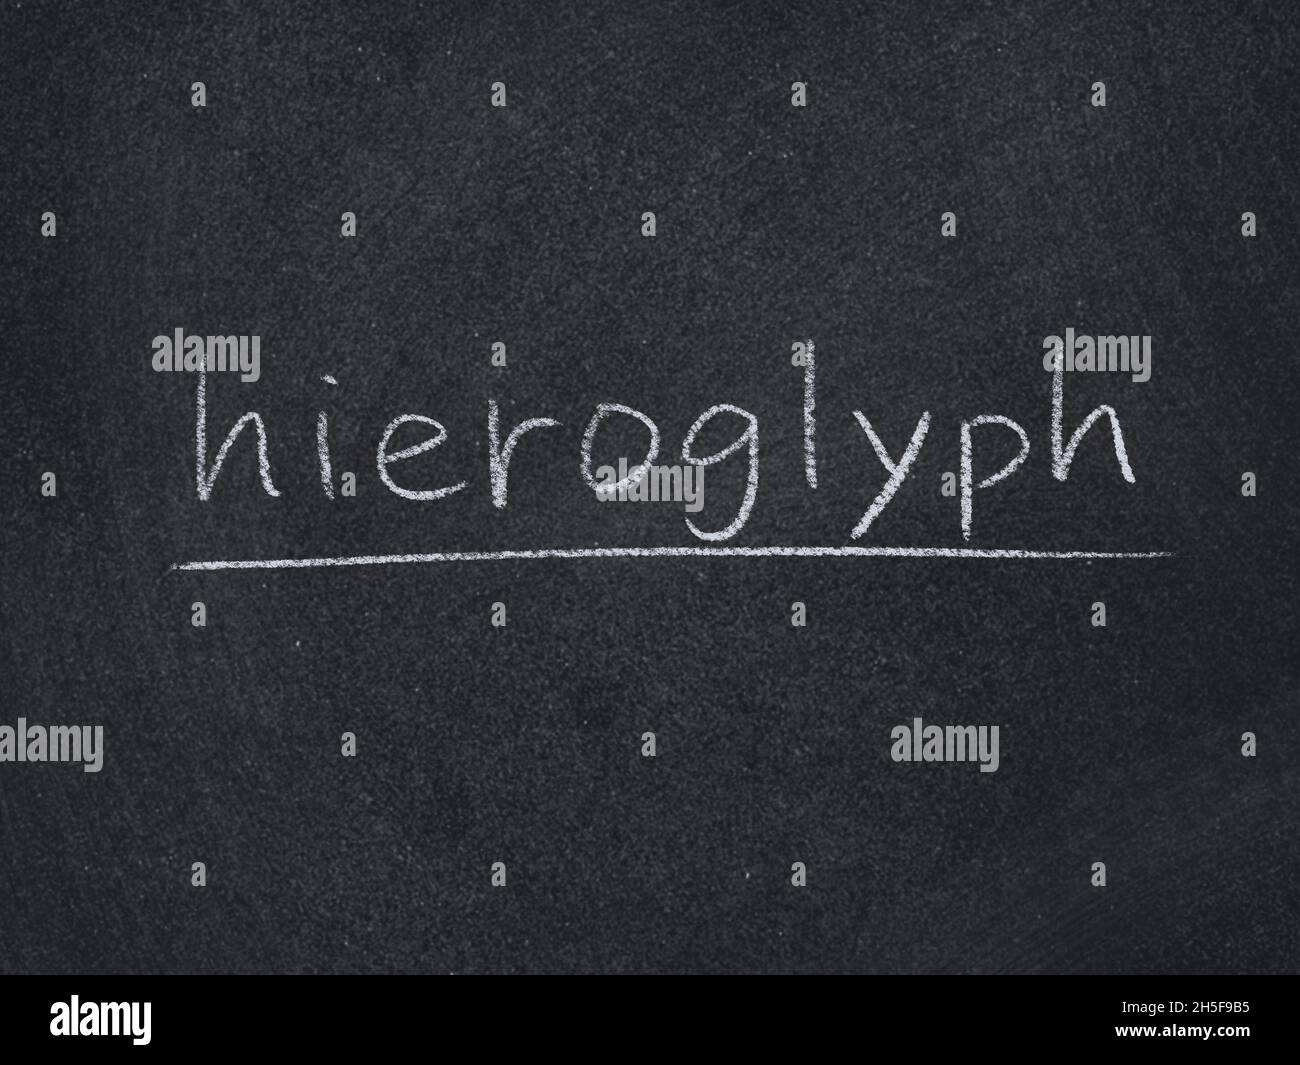 hieroglyph concept word on blackboard background Stock Photo